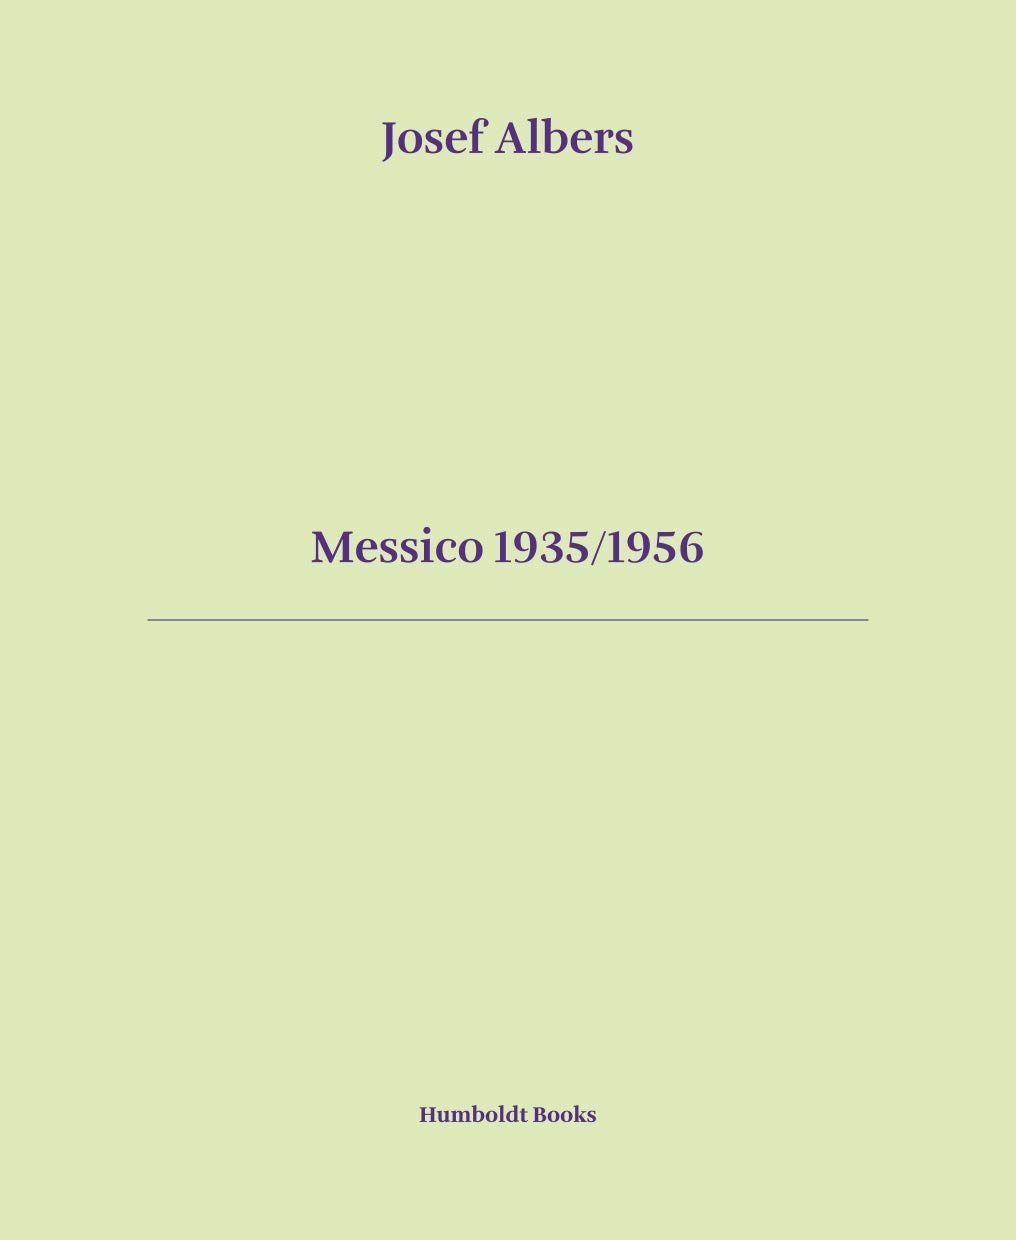 Josef Albers – Messico 1935 1956 (Humboldt Books, Milano 2021)